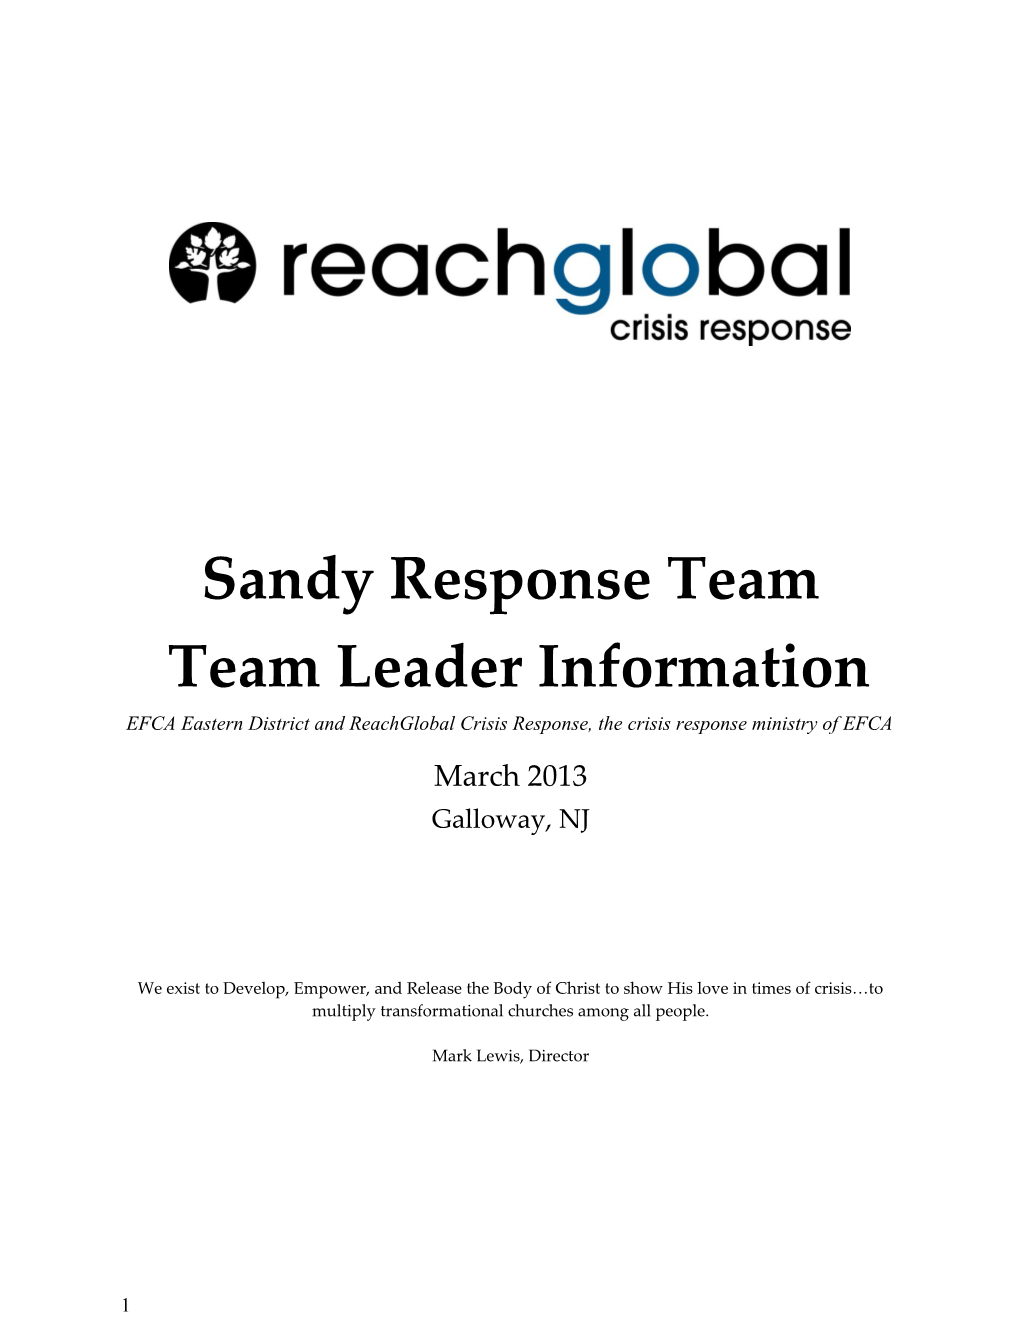 Sandy Response Team Team Leader Information